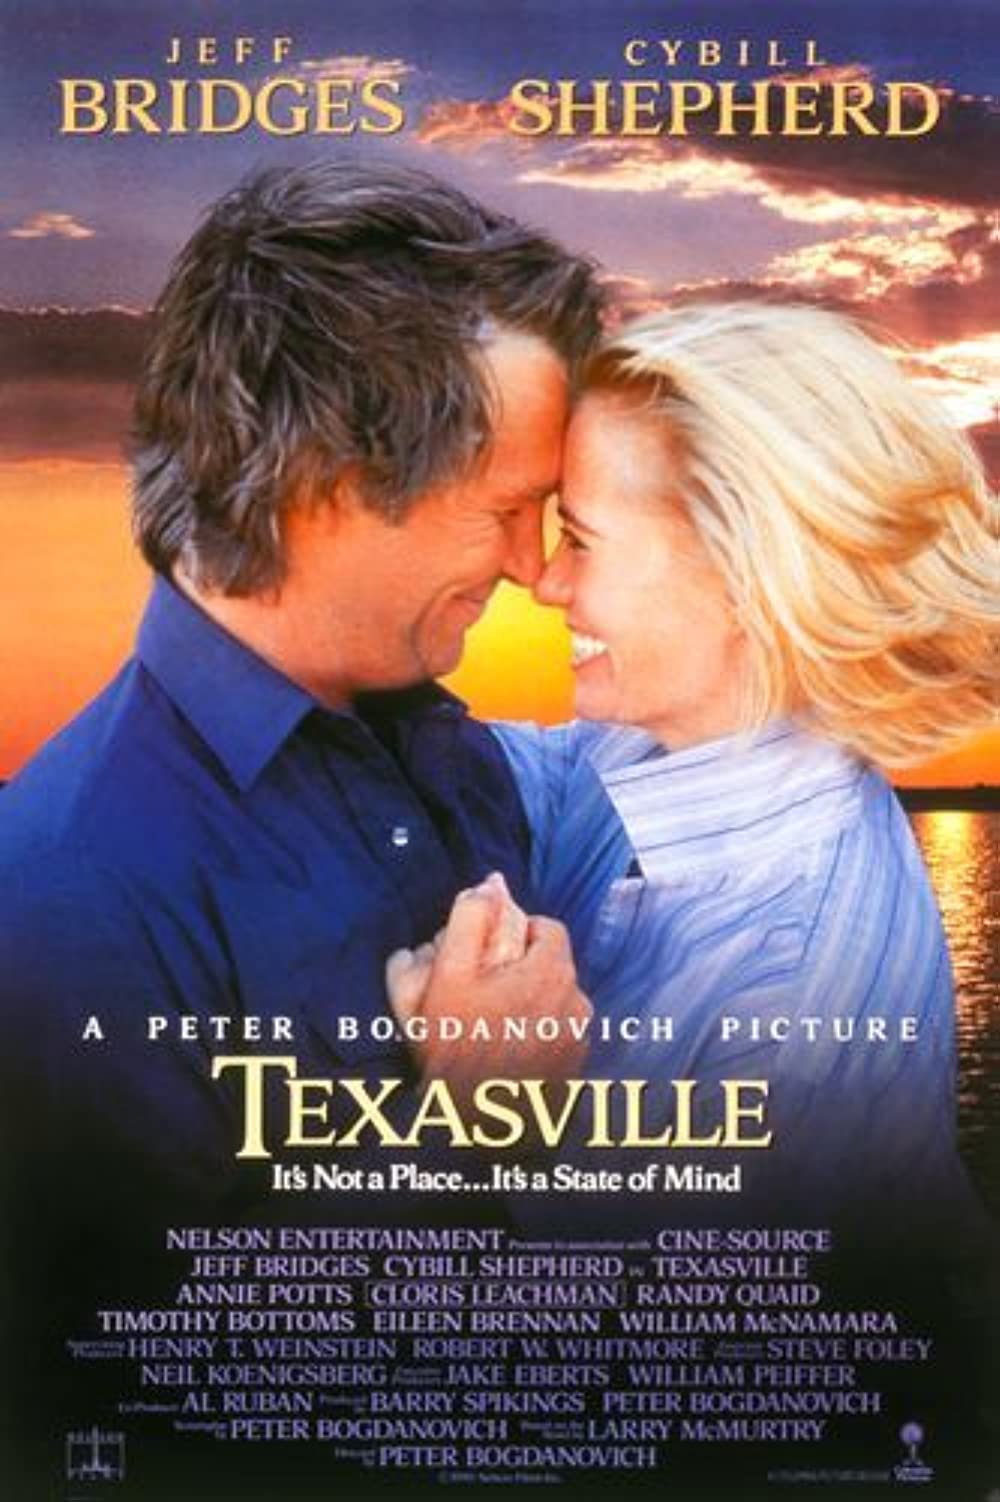 Filmbeschreibung zu Texasville